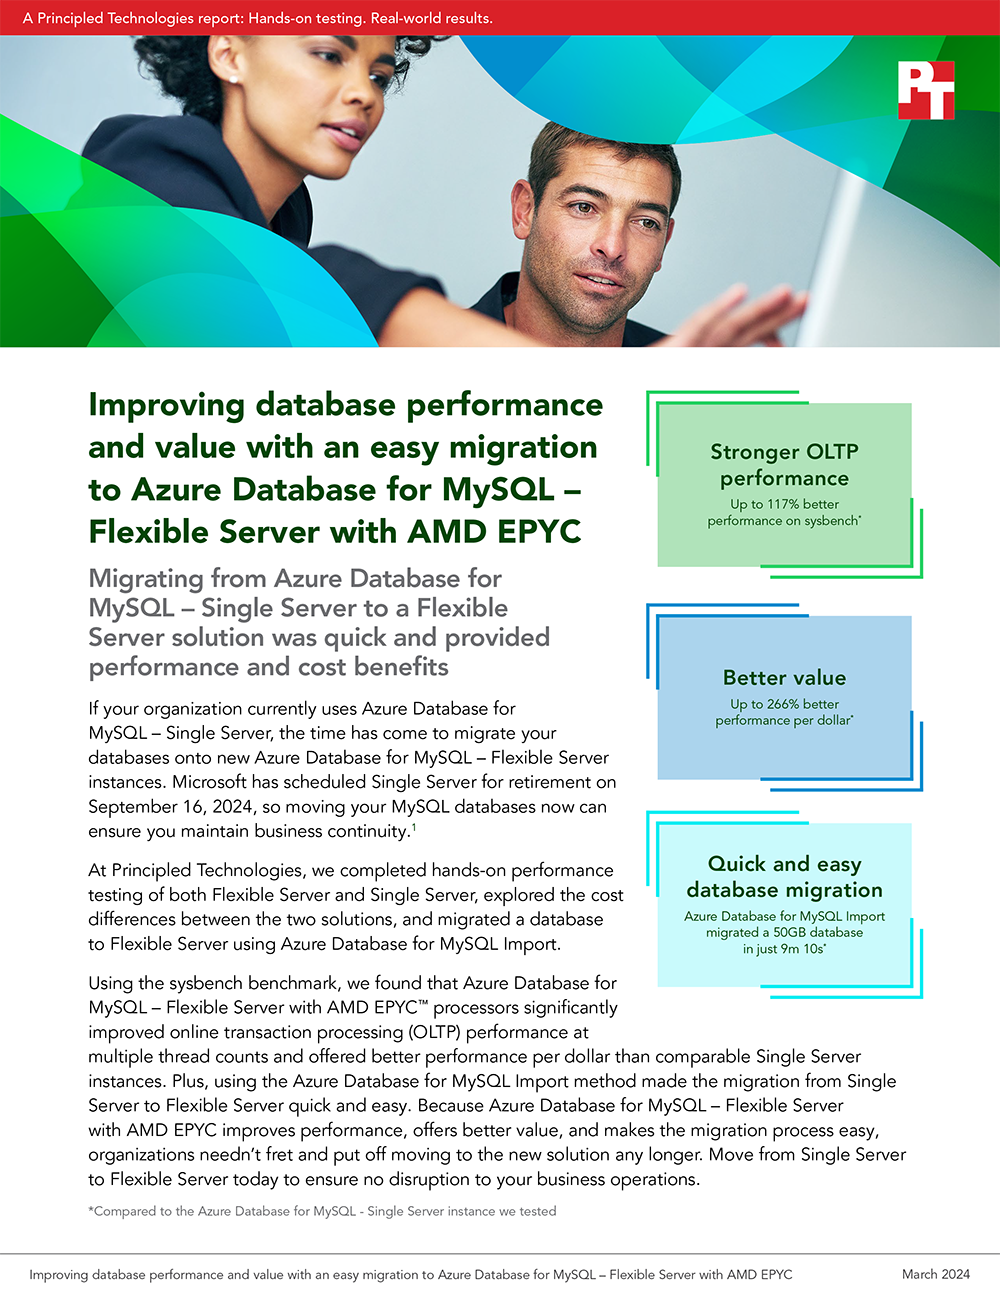 Principled Technologies Finds That Azure Database for MySQL – Flexible Server Outperformed the Soon-to-be-Retired Azure Database for MySQL – Single Server